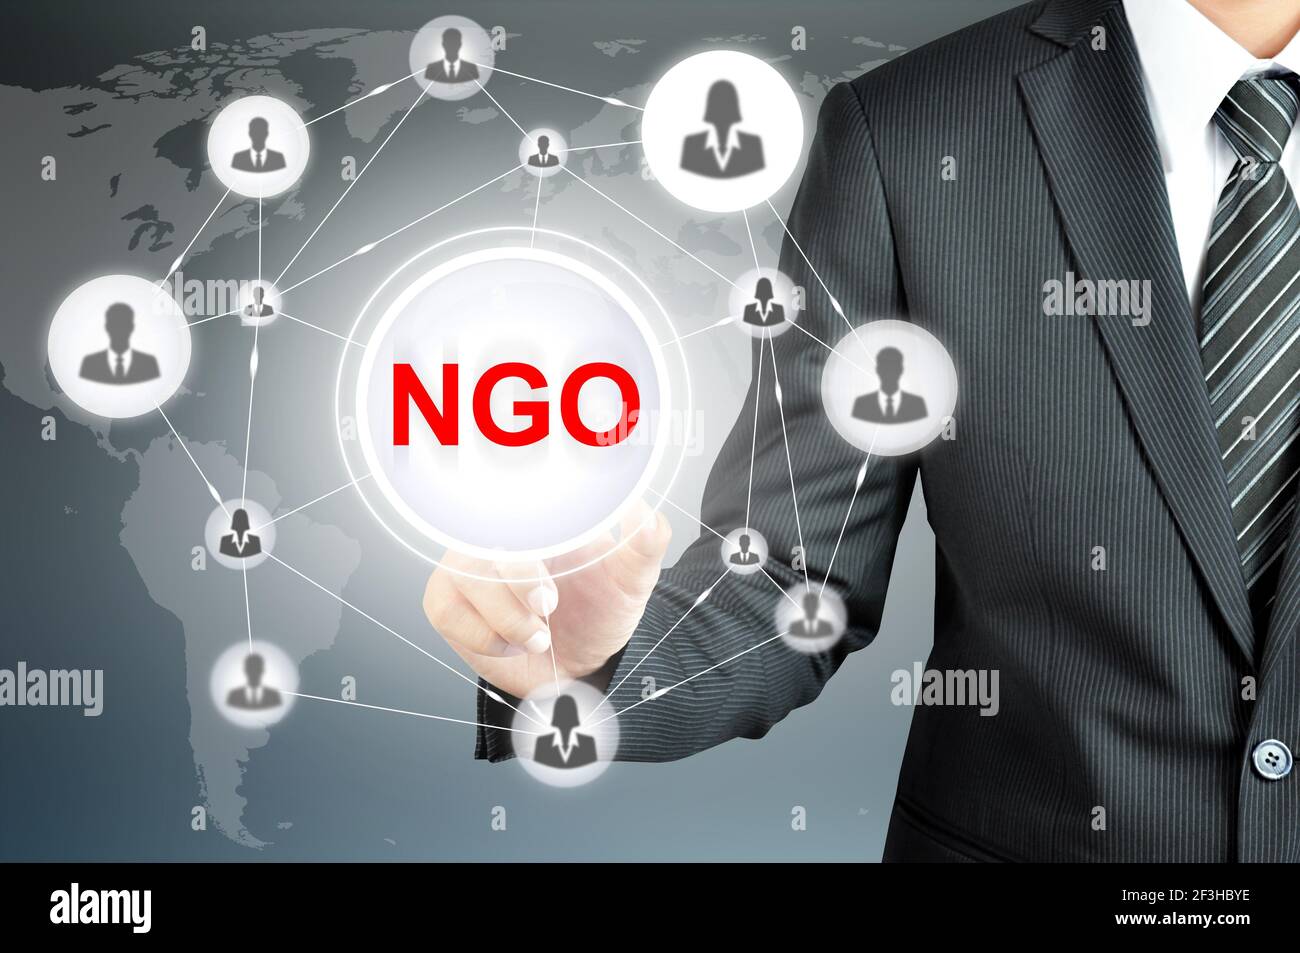 Empresario que señala a ONG (organización no gubernamental) inicie sesión en la pantalla virtual con iconos de personas vinculados como red Foto de stock